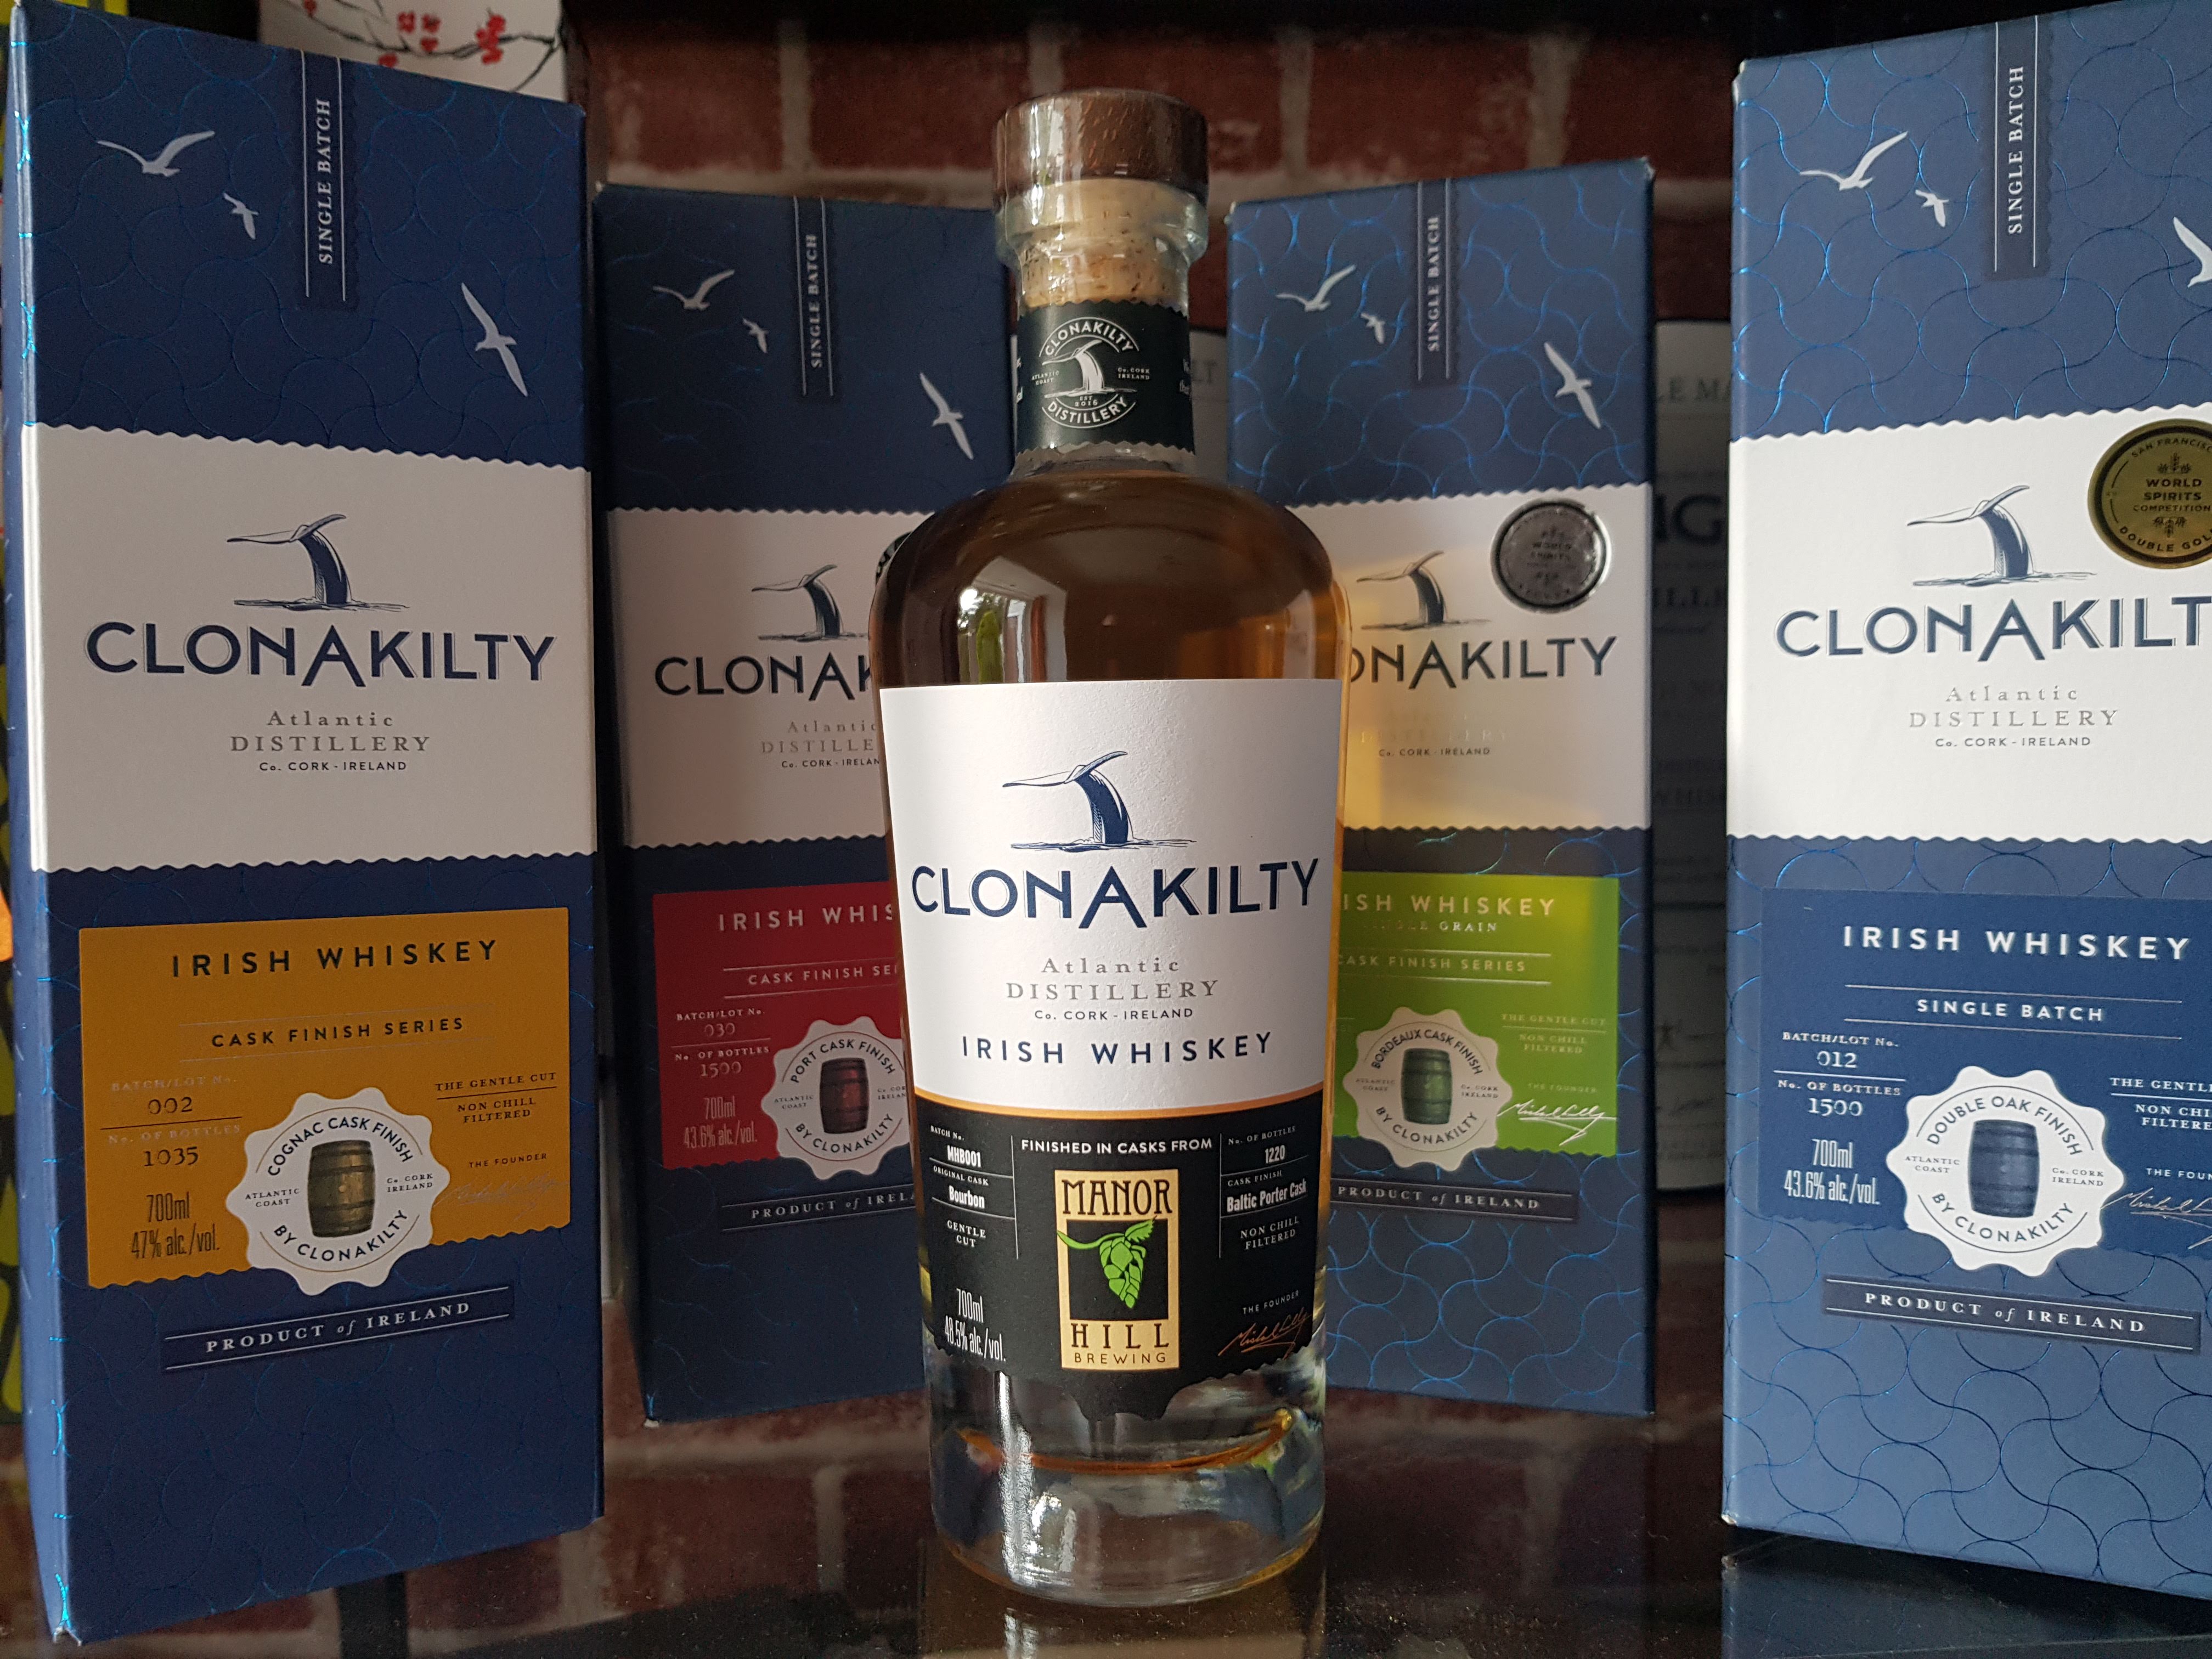 Clonakilty Distillery US Brewery Collaboration